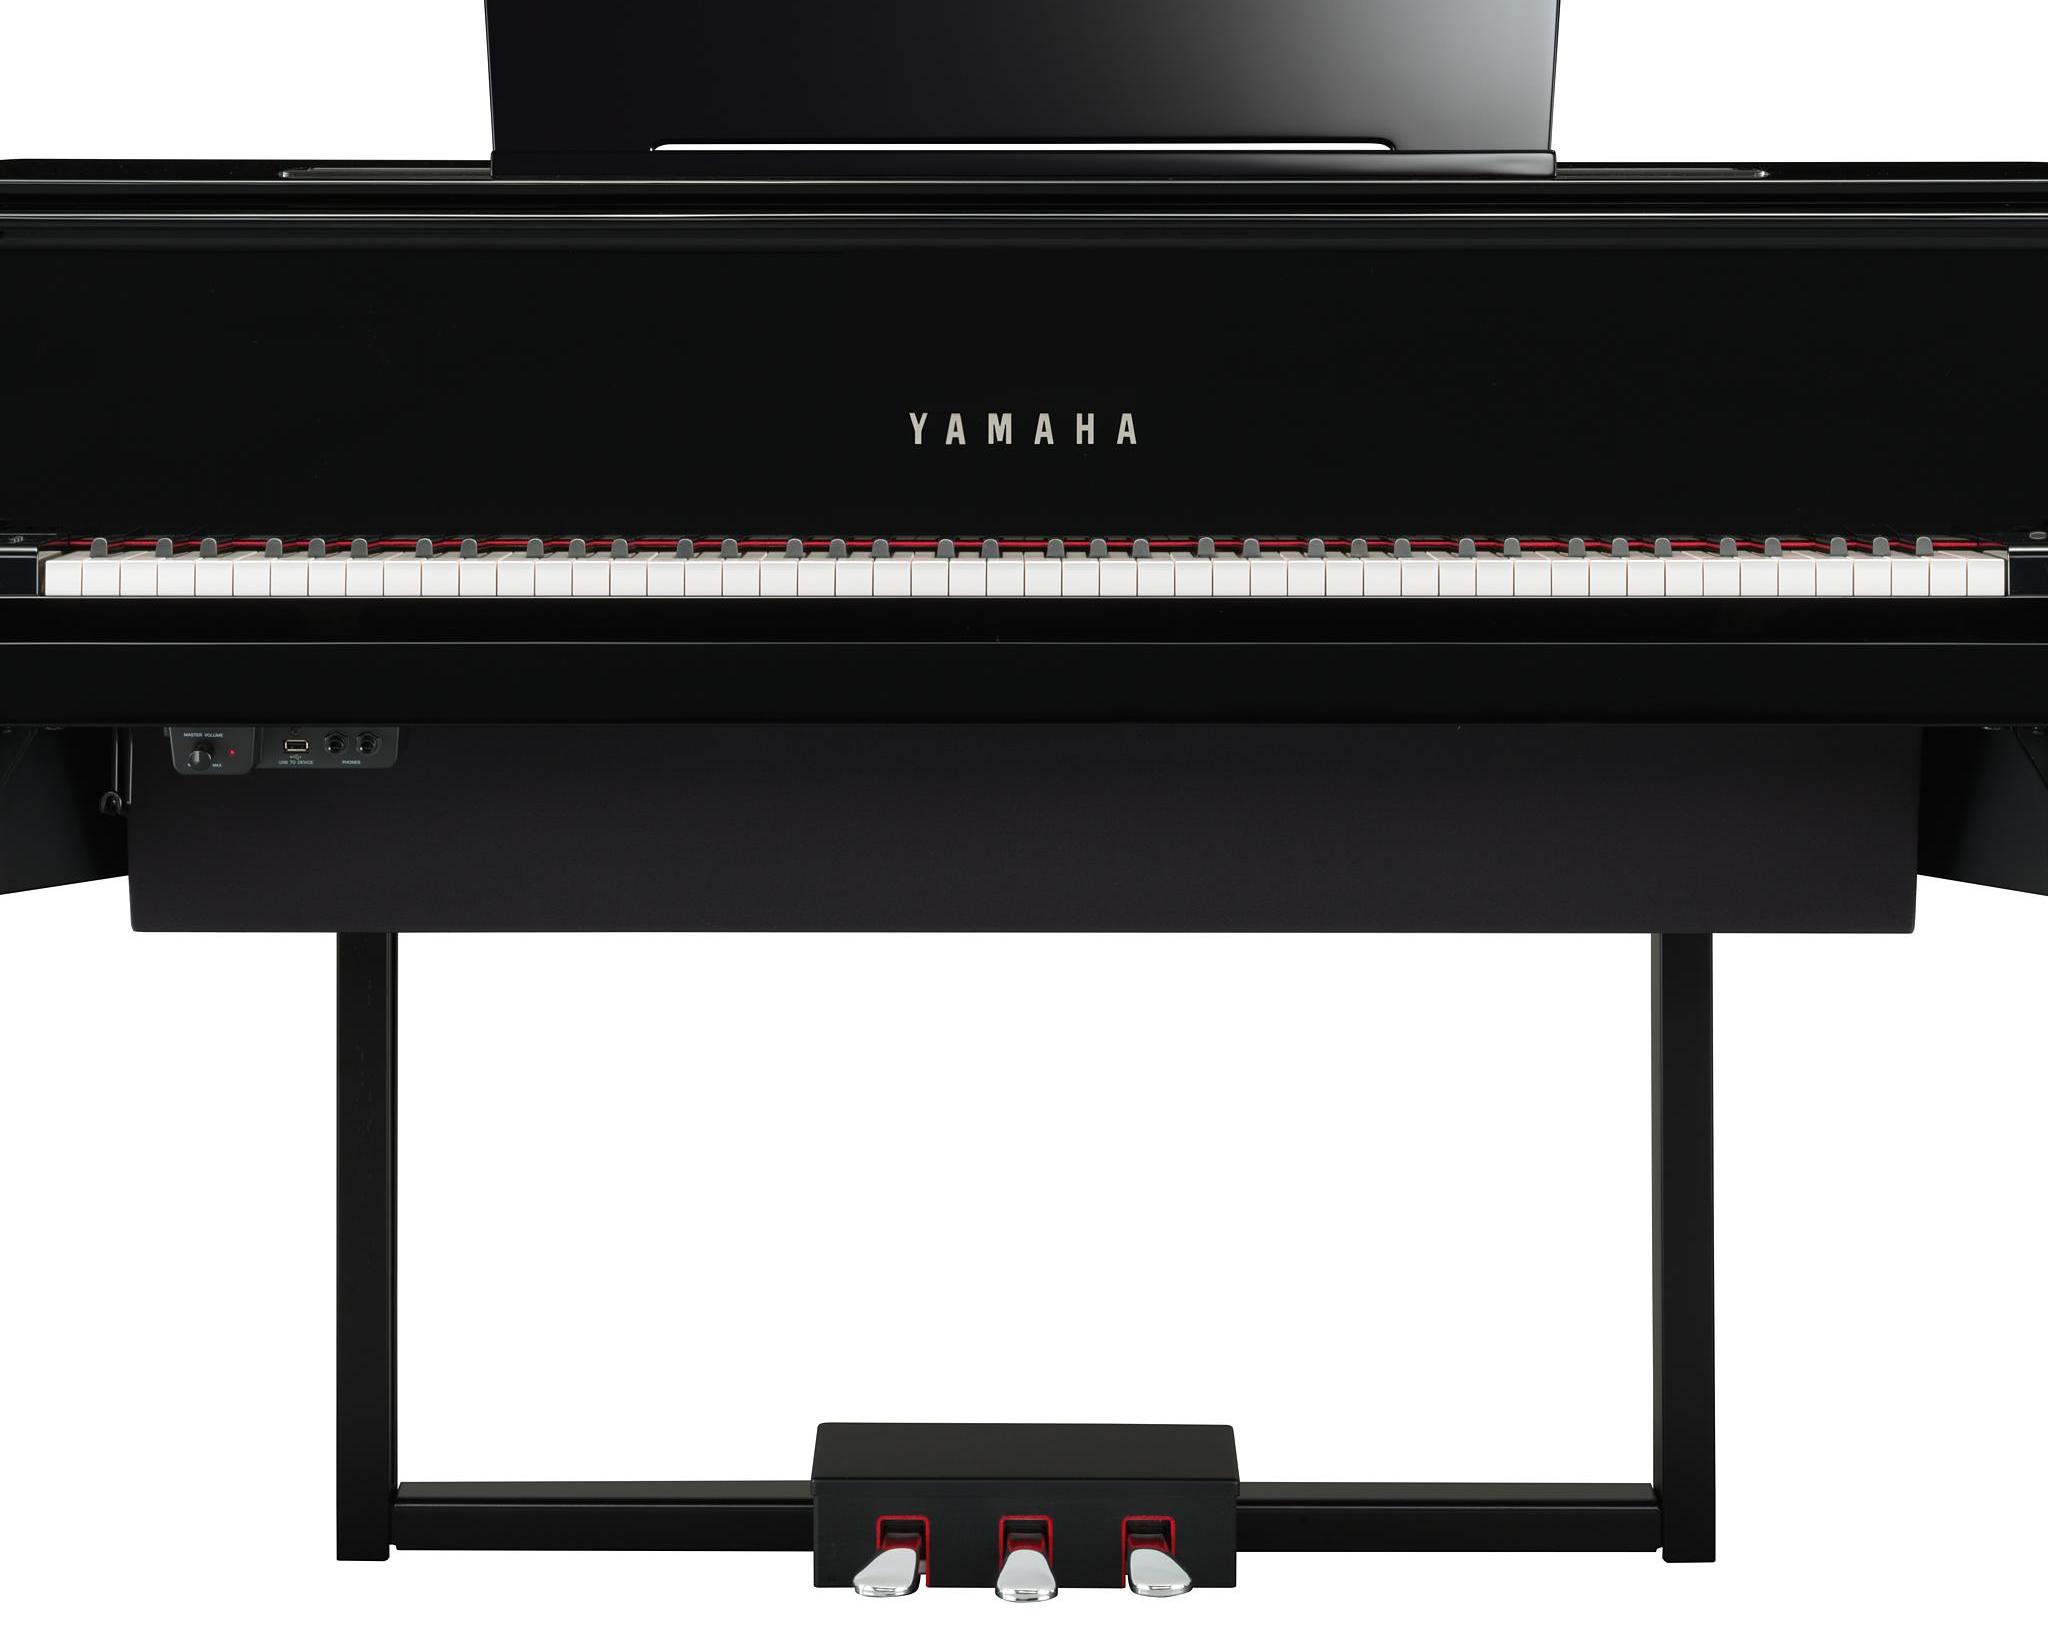 Piano numérique meuble Yamaha N-1X